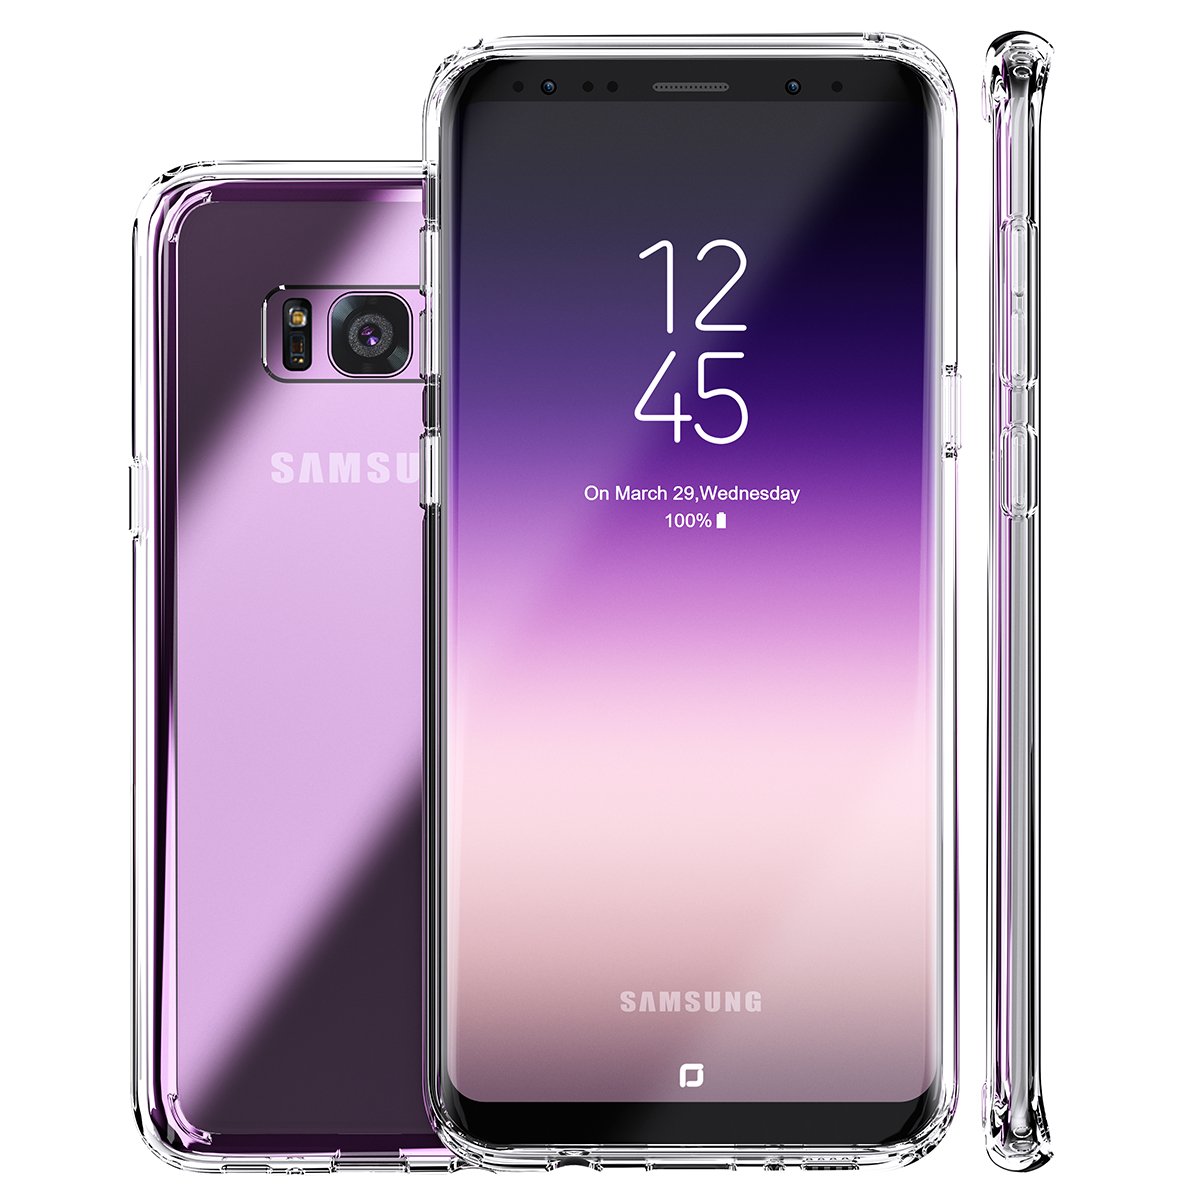 Samsung s9 s8. Samsung s8 Plus. Samsung Galaxy s8. Samsung Galaxy s8 Plus. Самсунг галакси с 8.